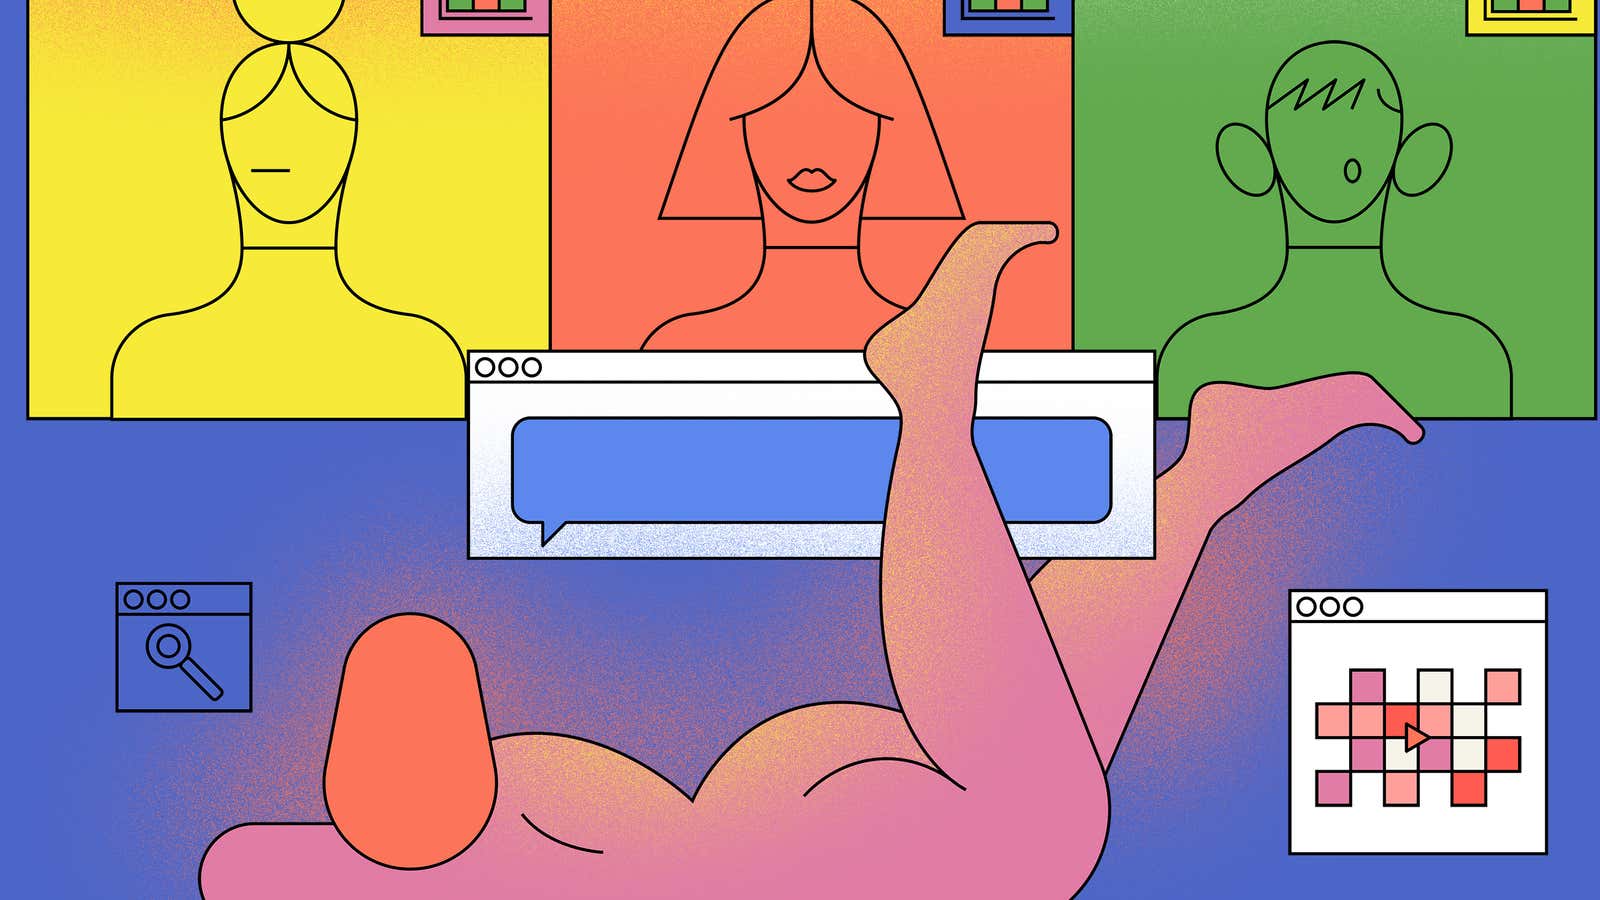 Hulu Xxx - Pornhub's owner has more user data than Netflix or Hulu, here's why